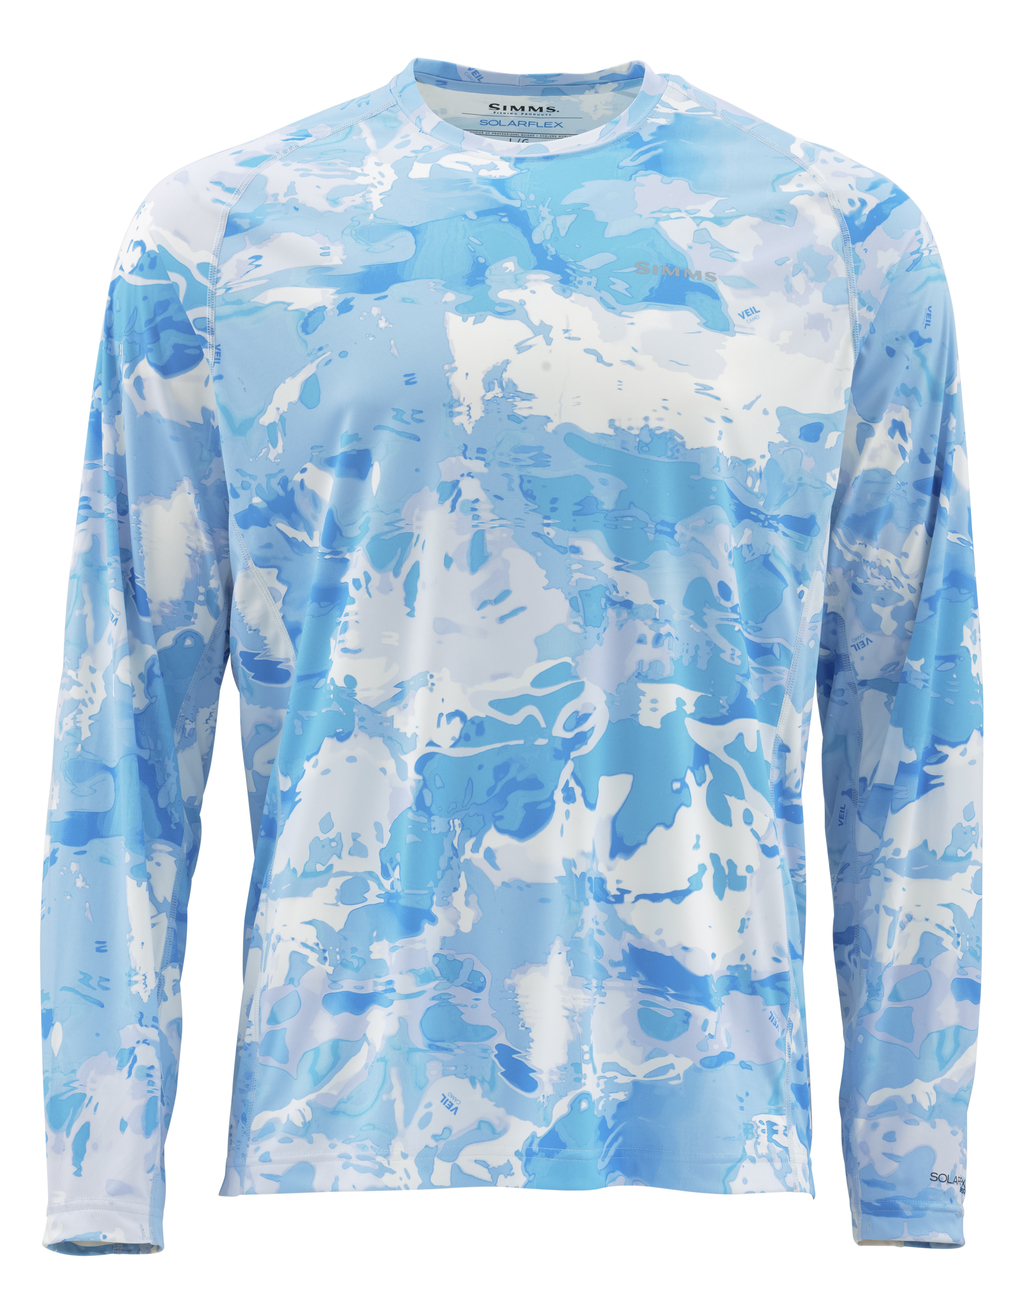 Simms Solarflex LS Crew Graphic Prints Shirt cloud camo blue 